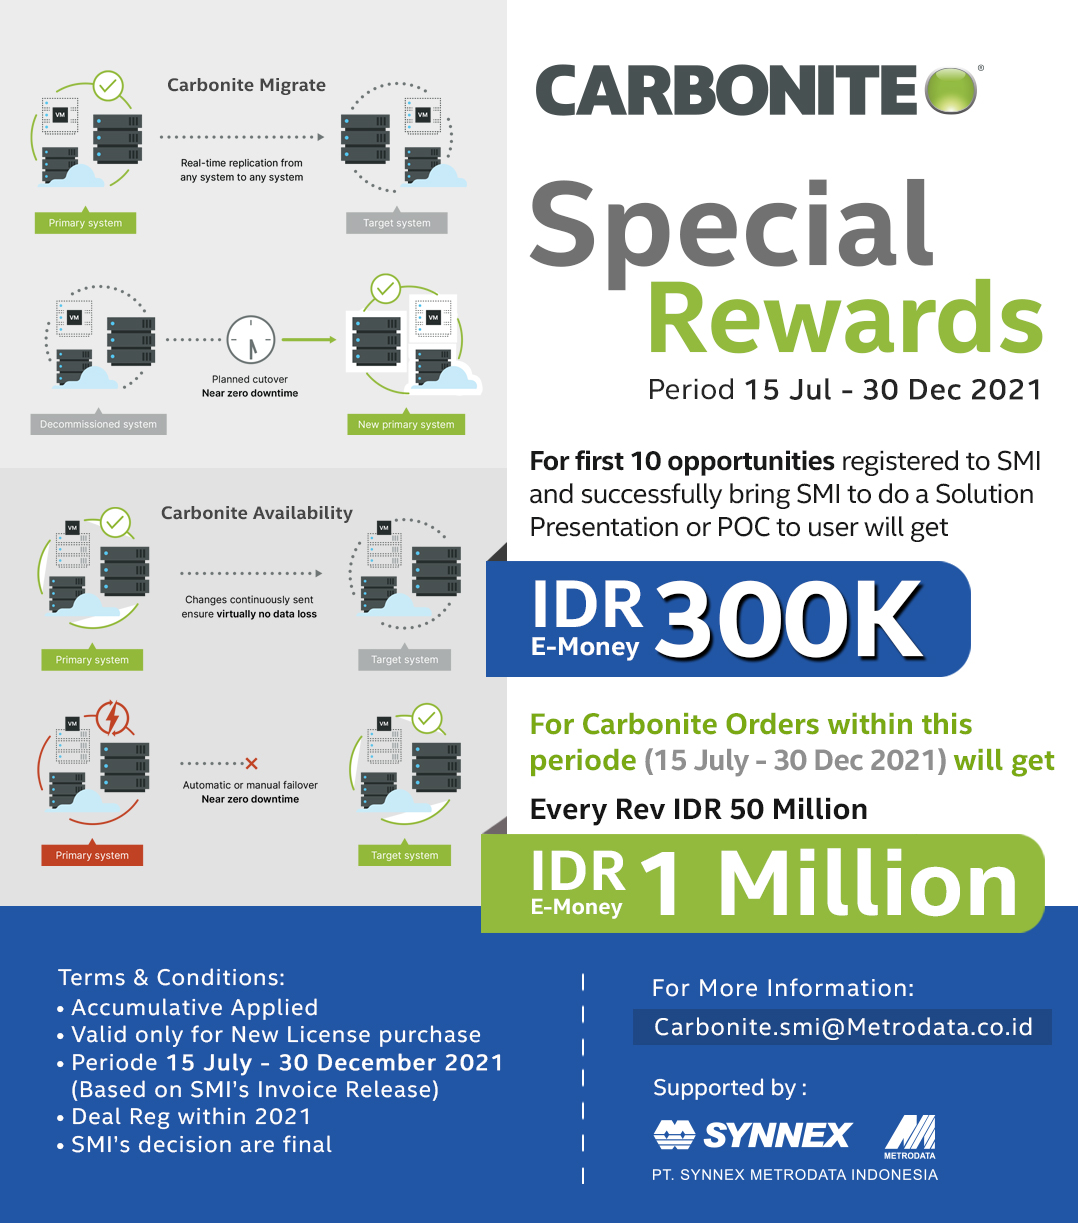 Carbonite Special Rewards